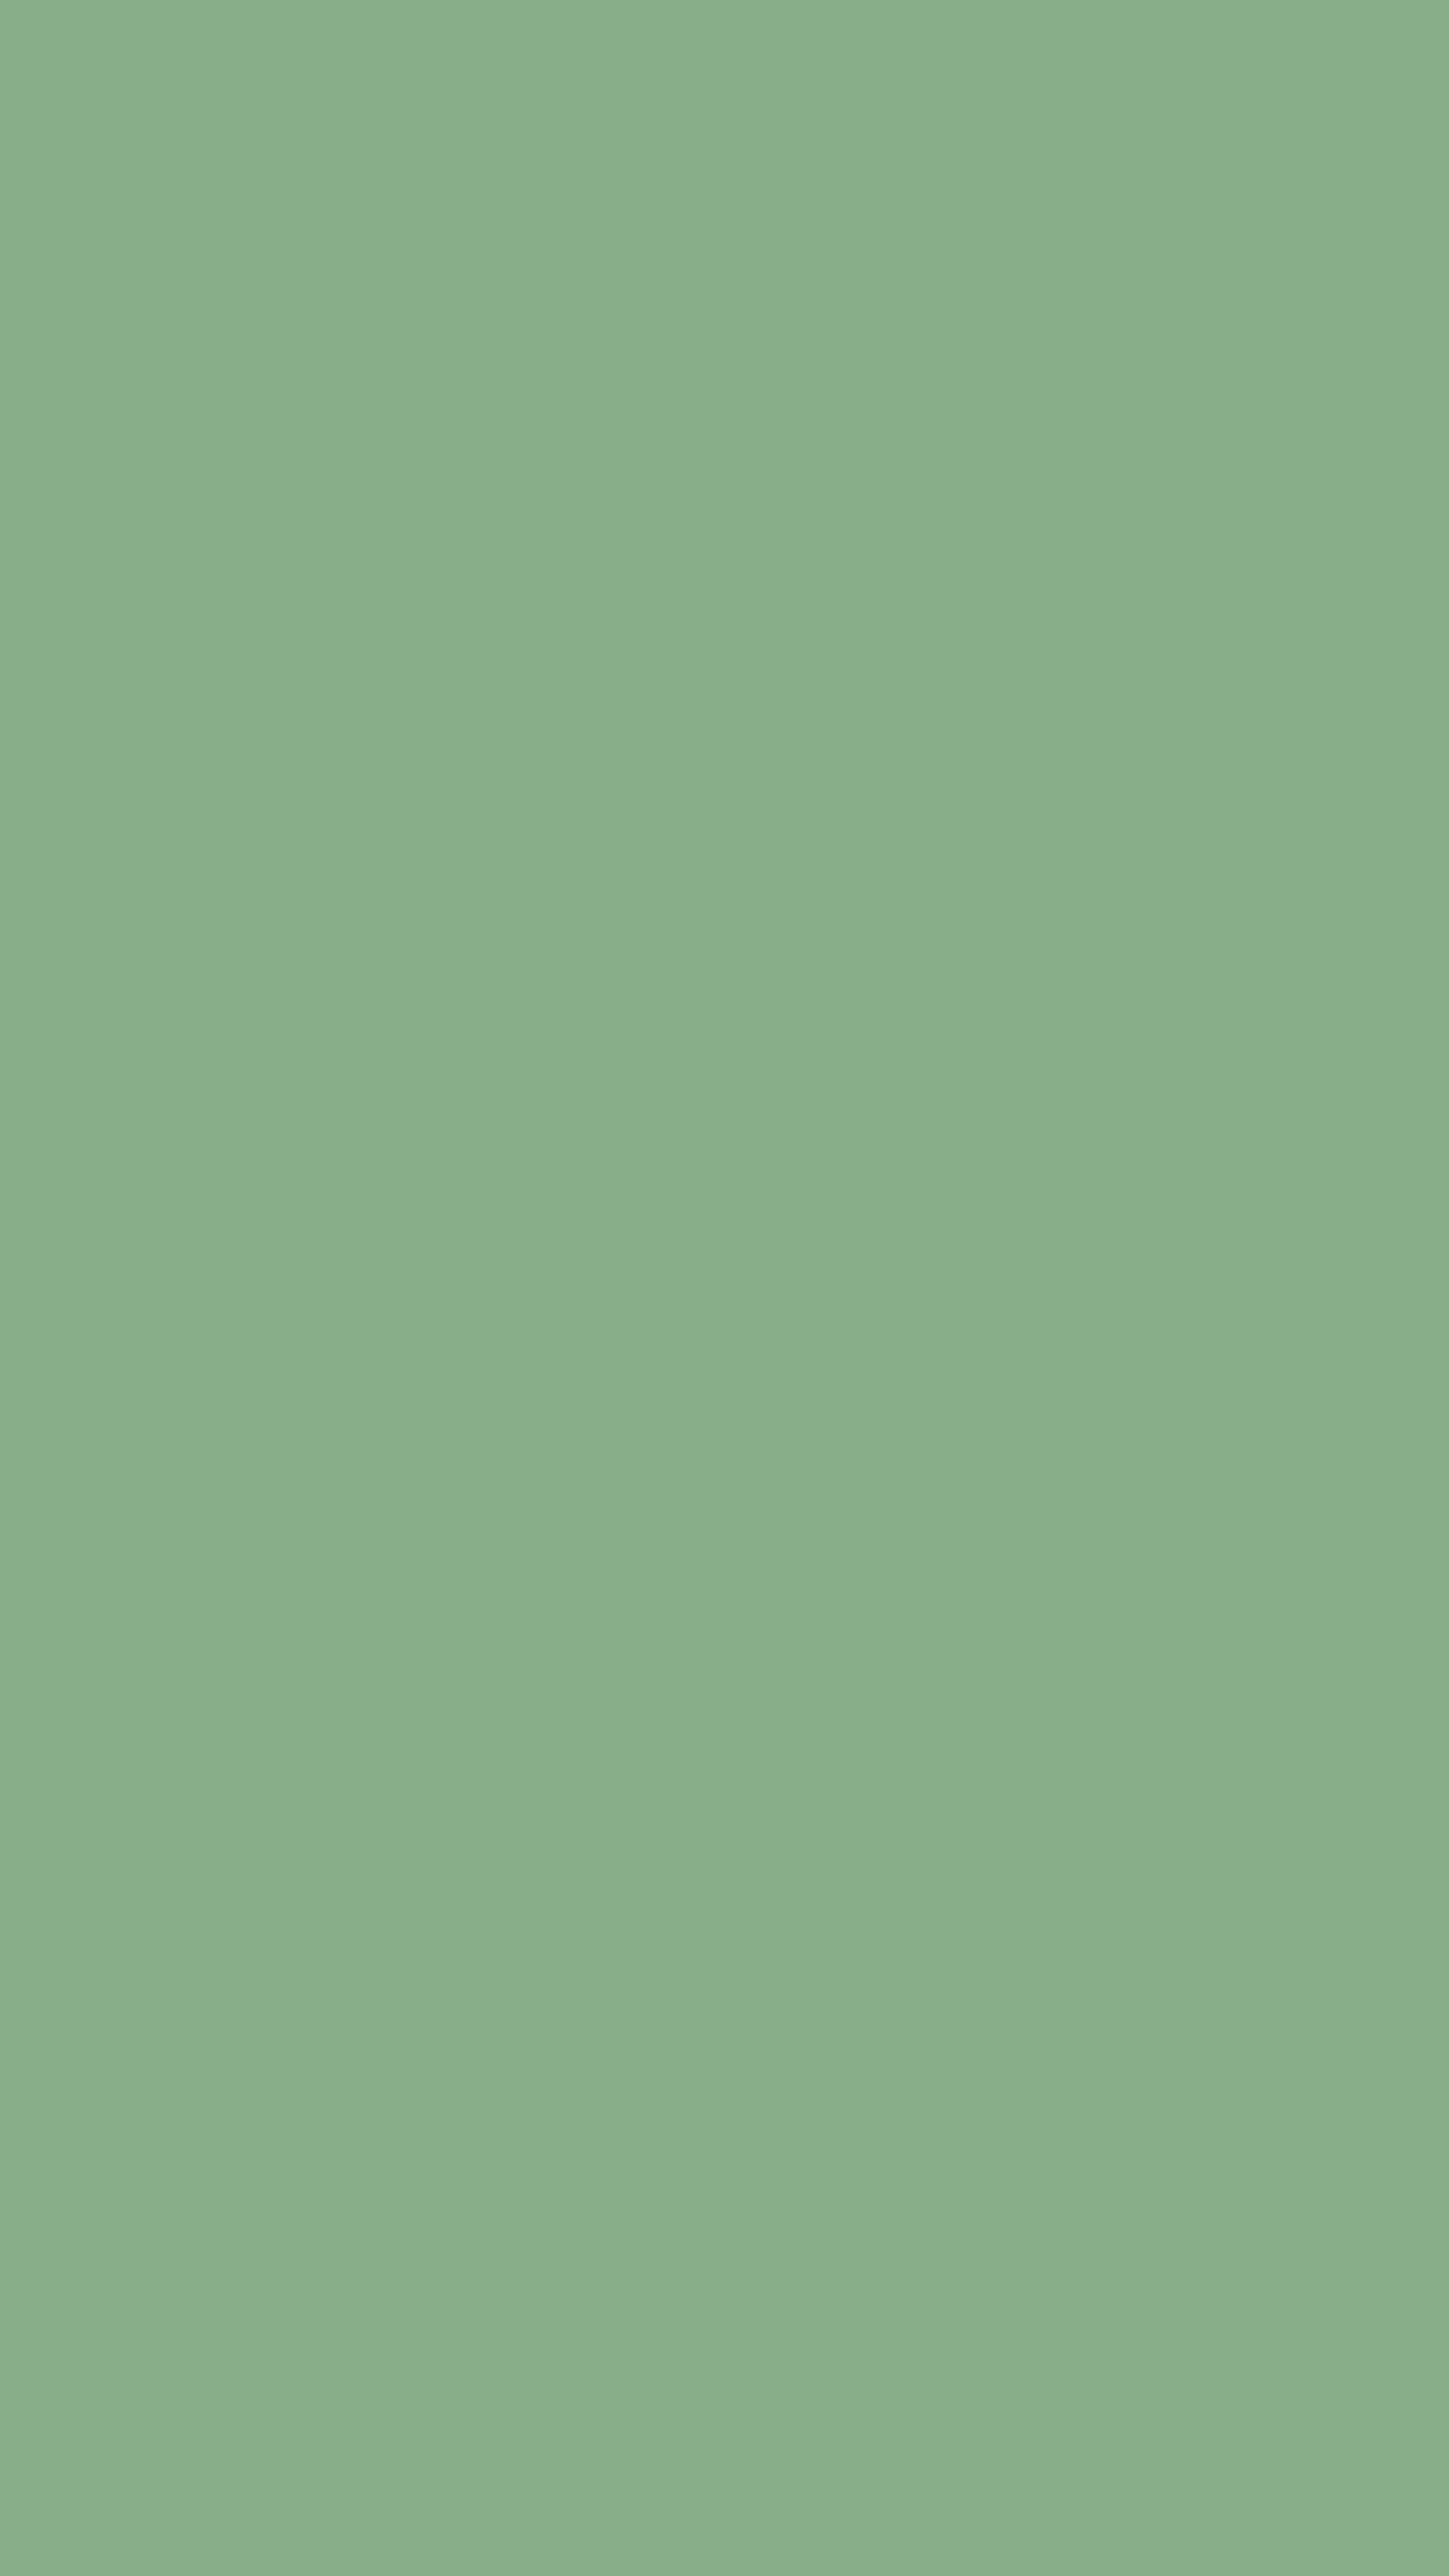 Mint Green Simple Design Background Дэлгэцийн зураг[26a2bc9029ec4c7c851f]